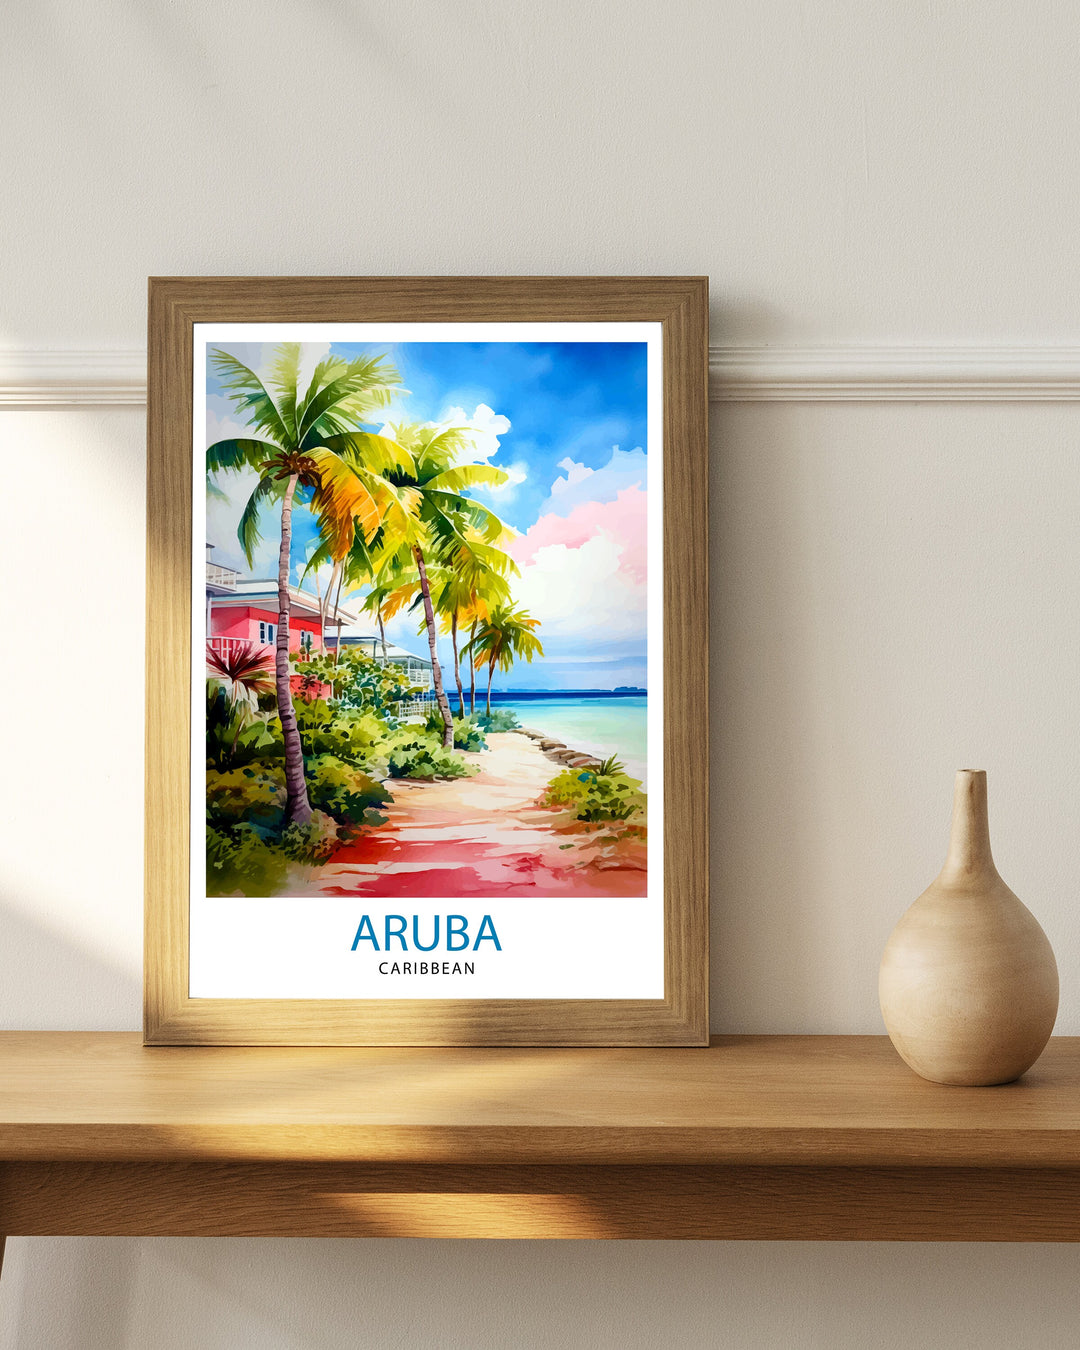 Aruba Caribbean Island Art Poster Tropical Beach Decor Aruba Wall Art Caribbean Sea Poster Aruba Travel Illustration Island Home Decor